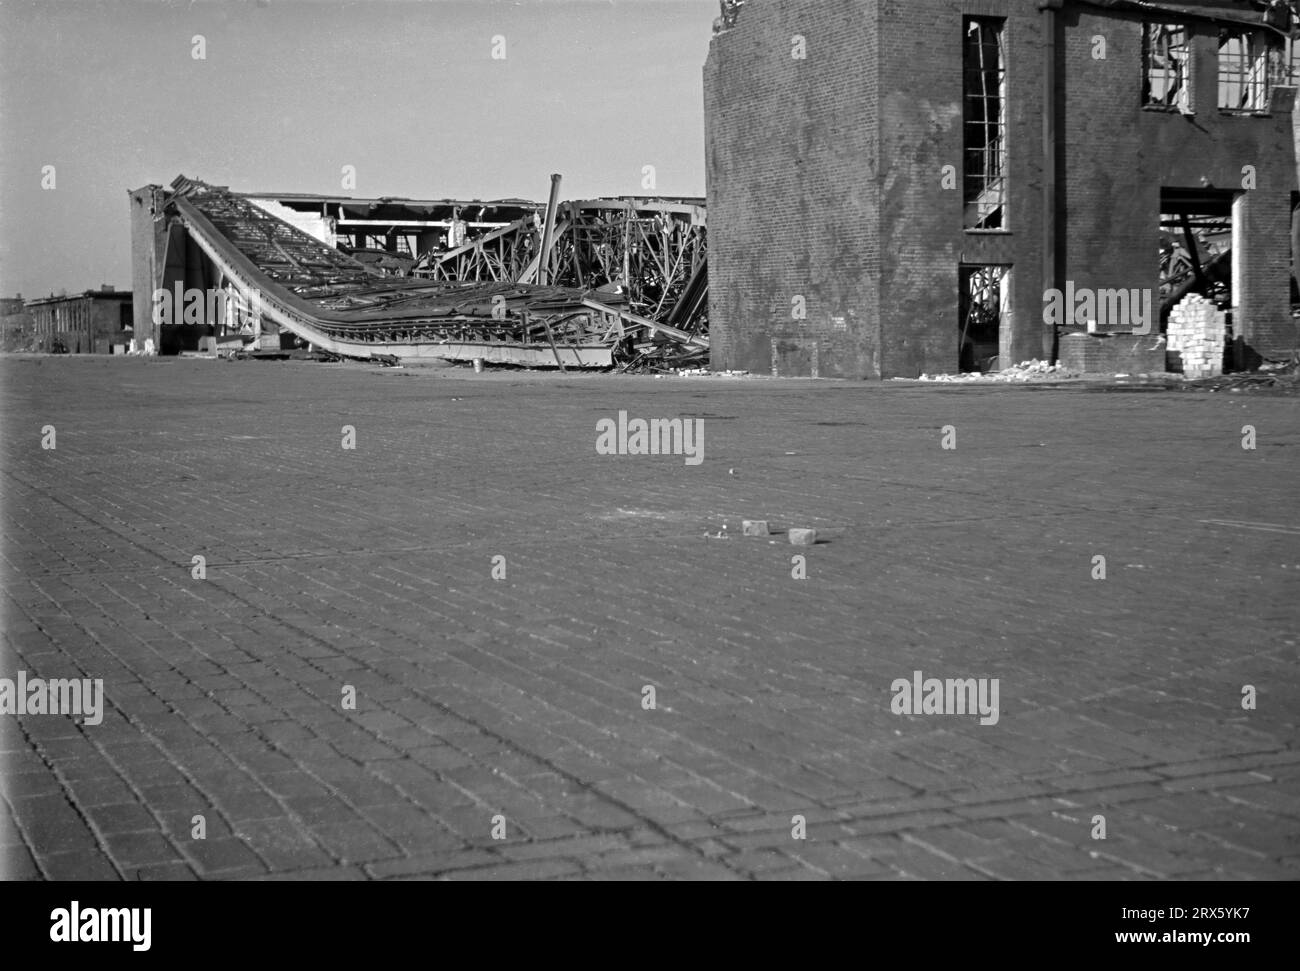 Bomb Damage Luftwaffe Planes Hangars Airfields / Damaged Aircraft Factory / Allied Air Raids in World War II - 1944 / 1945 Stock Photo